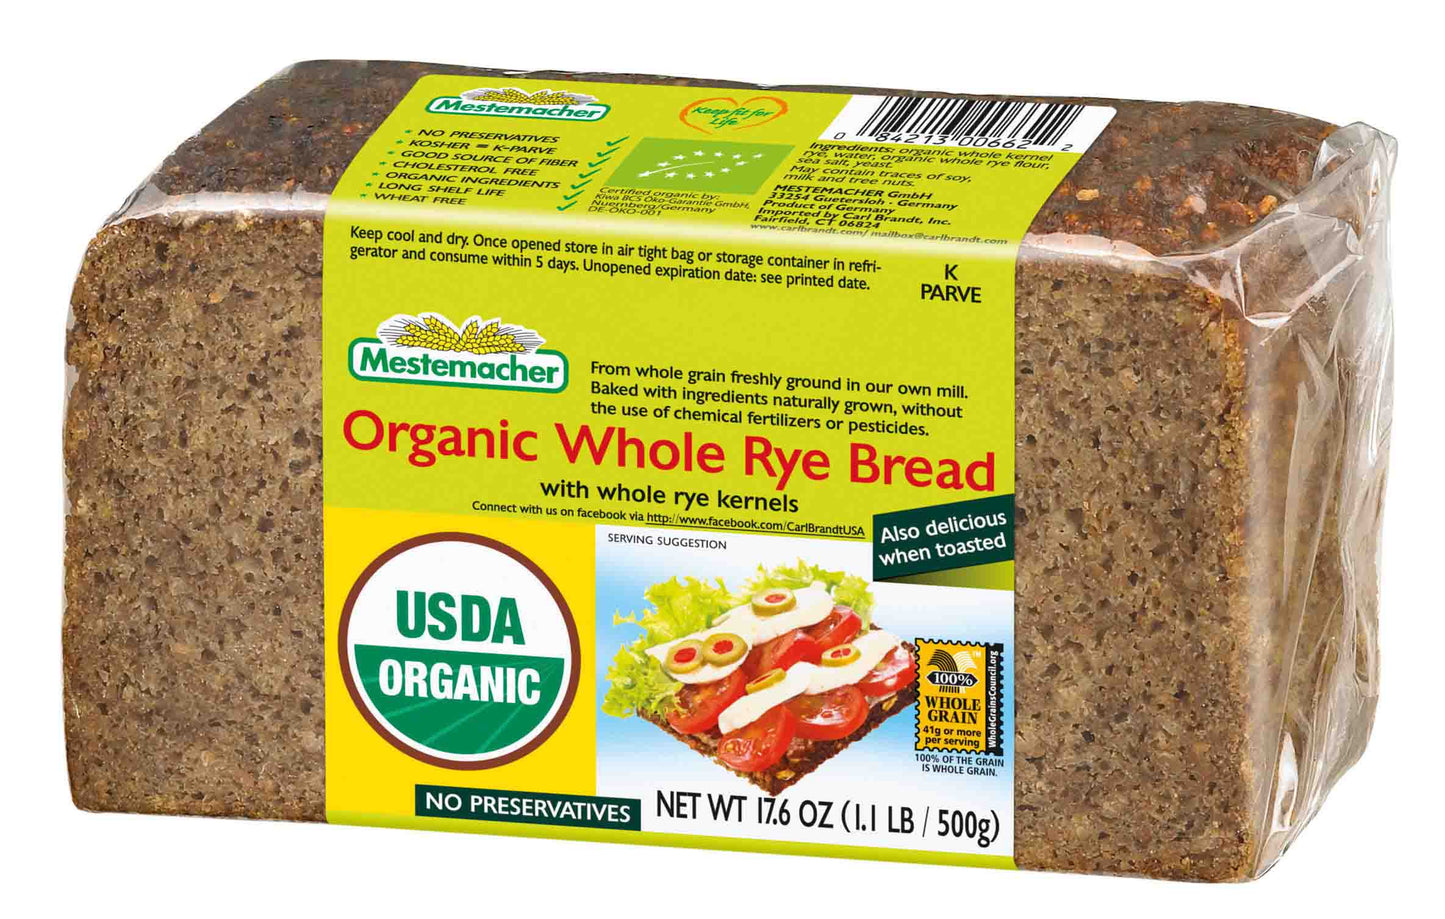 Mestemacher Organic Whole Rye Bread